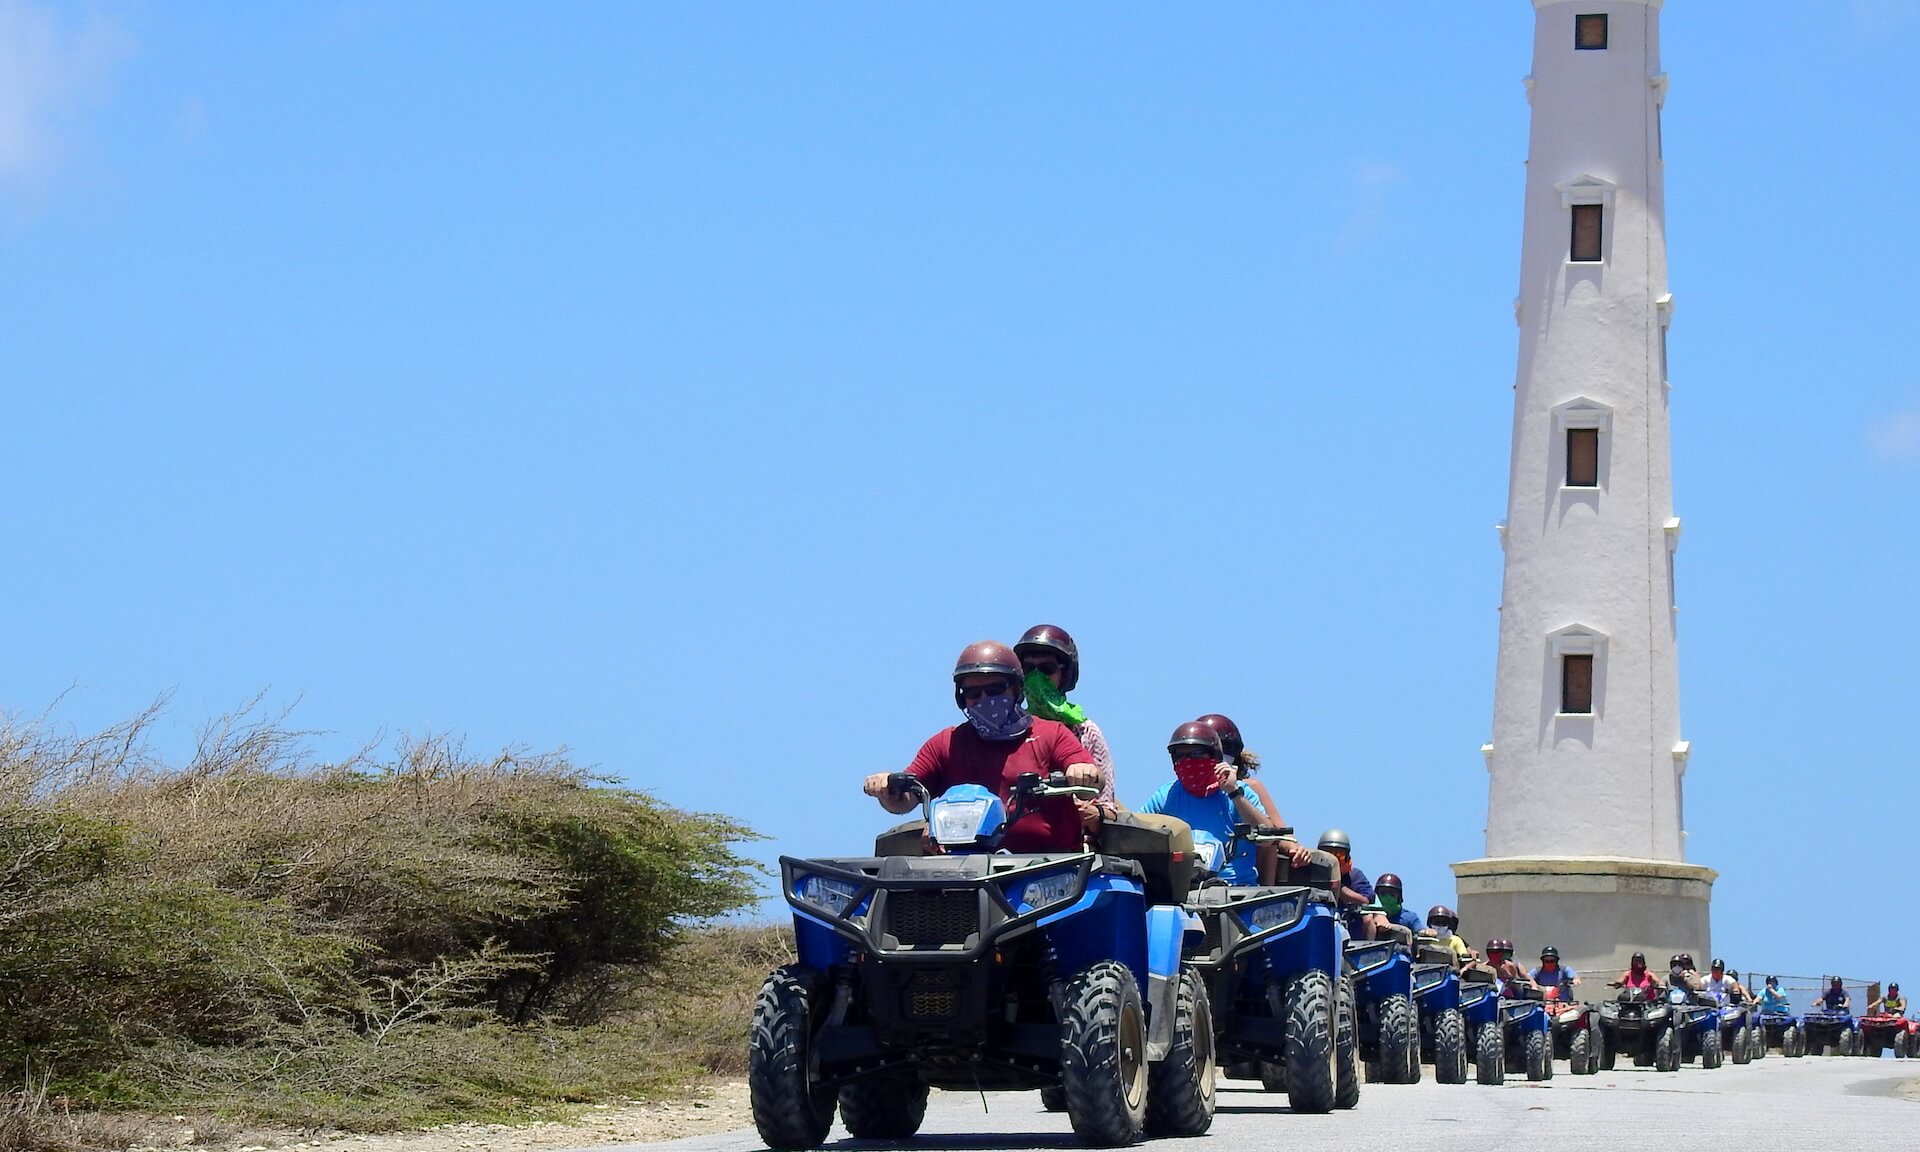 Action Tours Aruba Atv And Utv Adventure Activities And Tours In Aruba